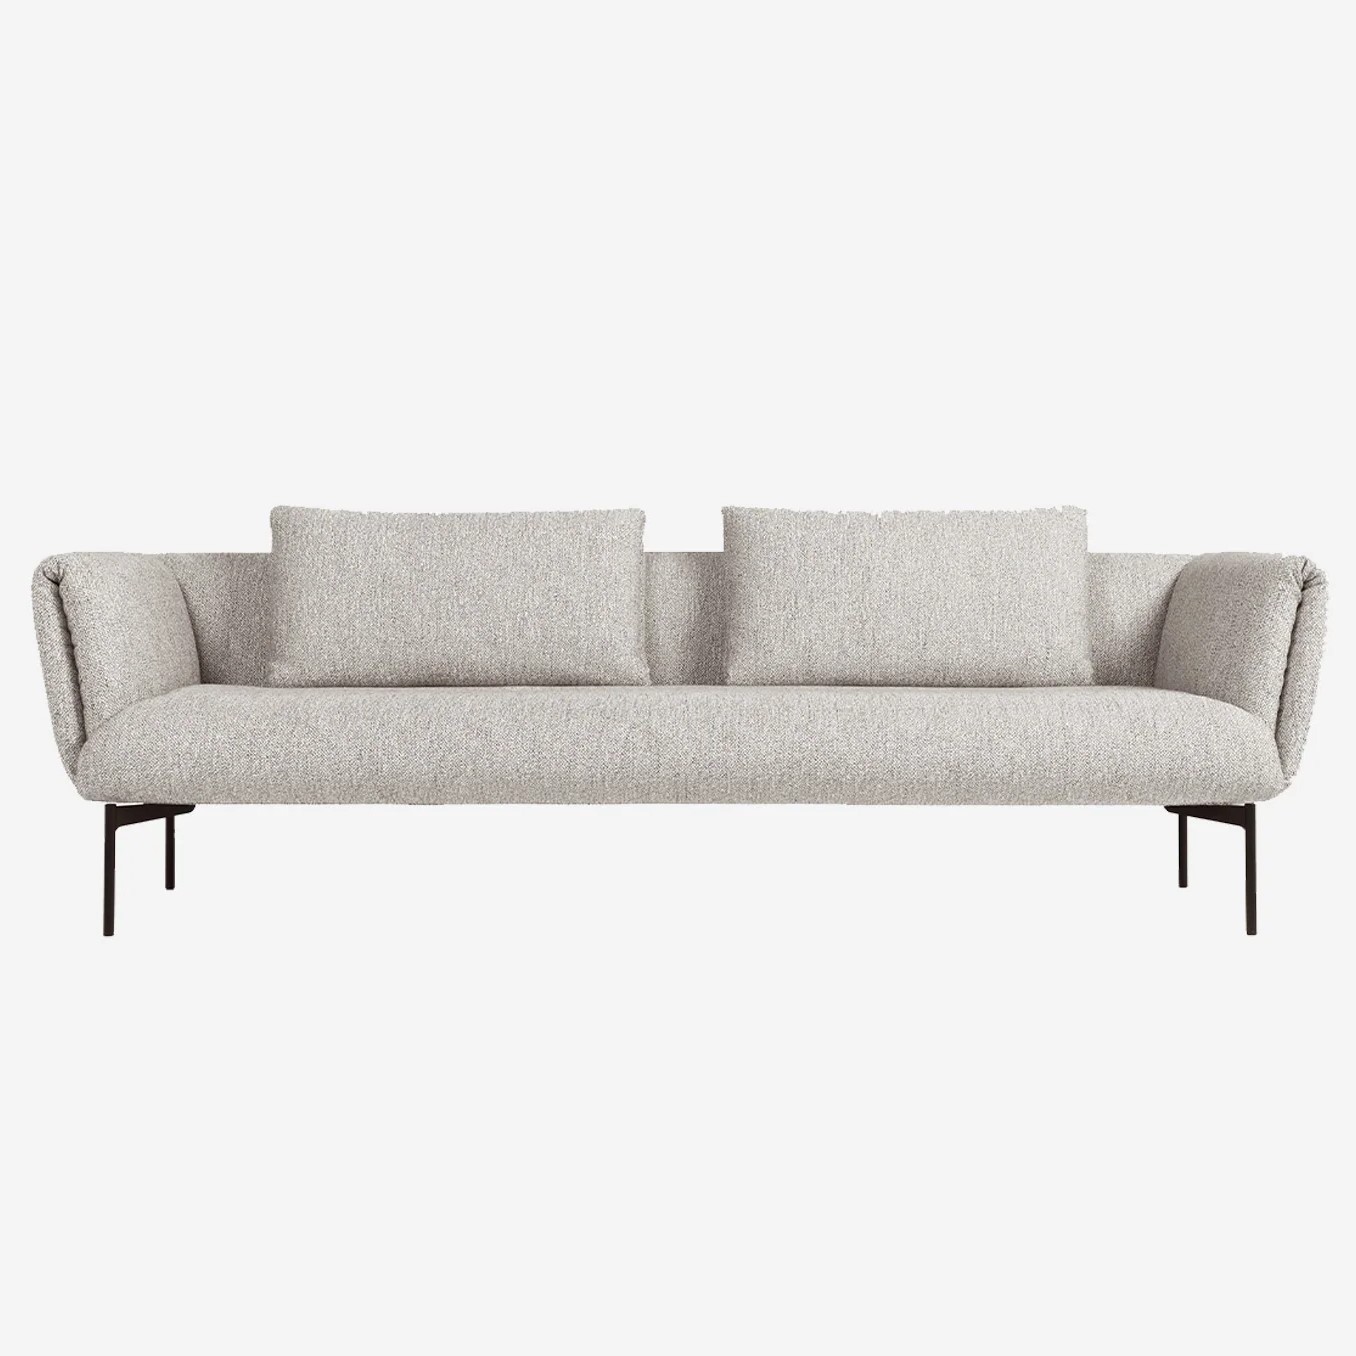 IMPRESSION 2.5seater sofa - offer